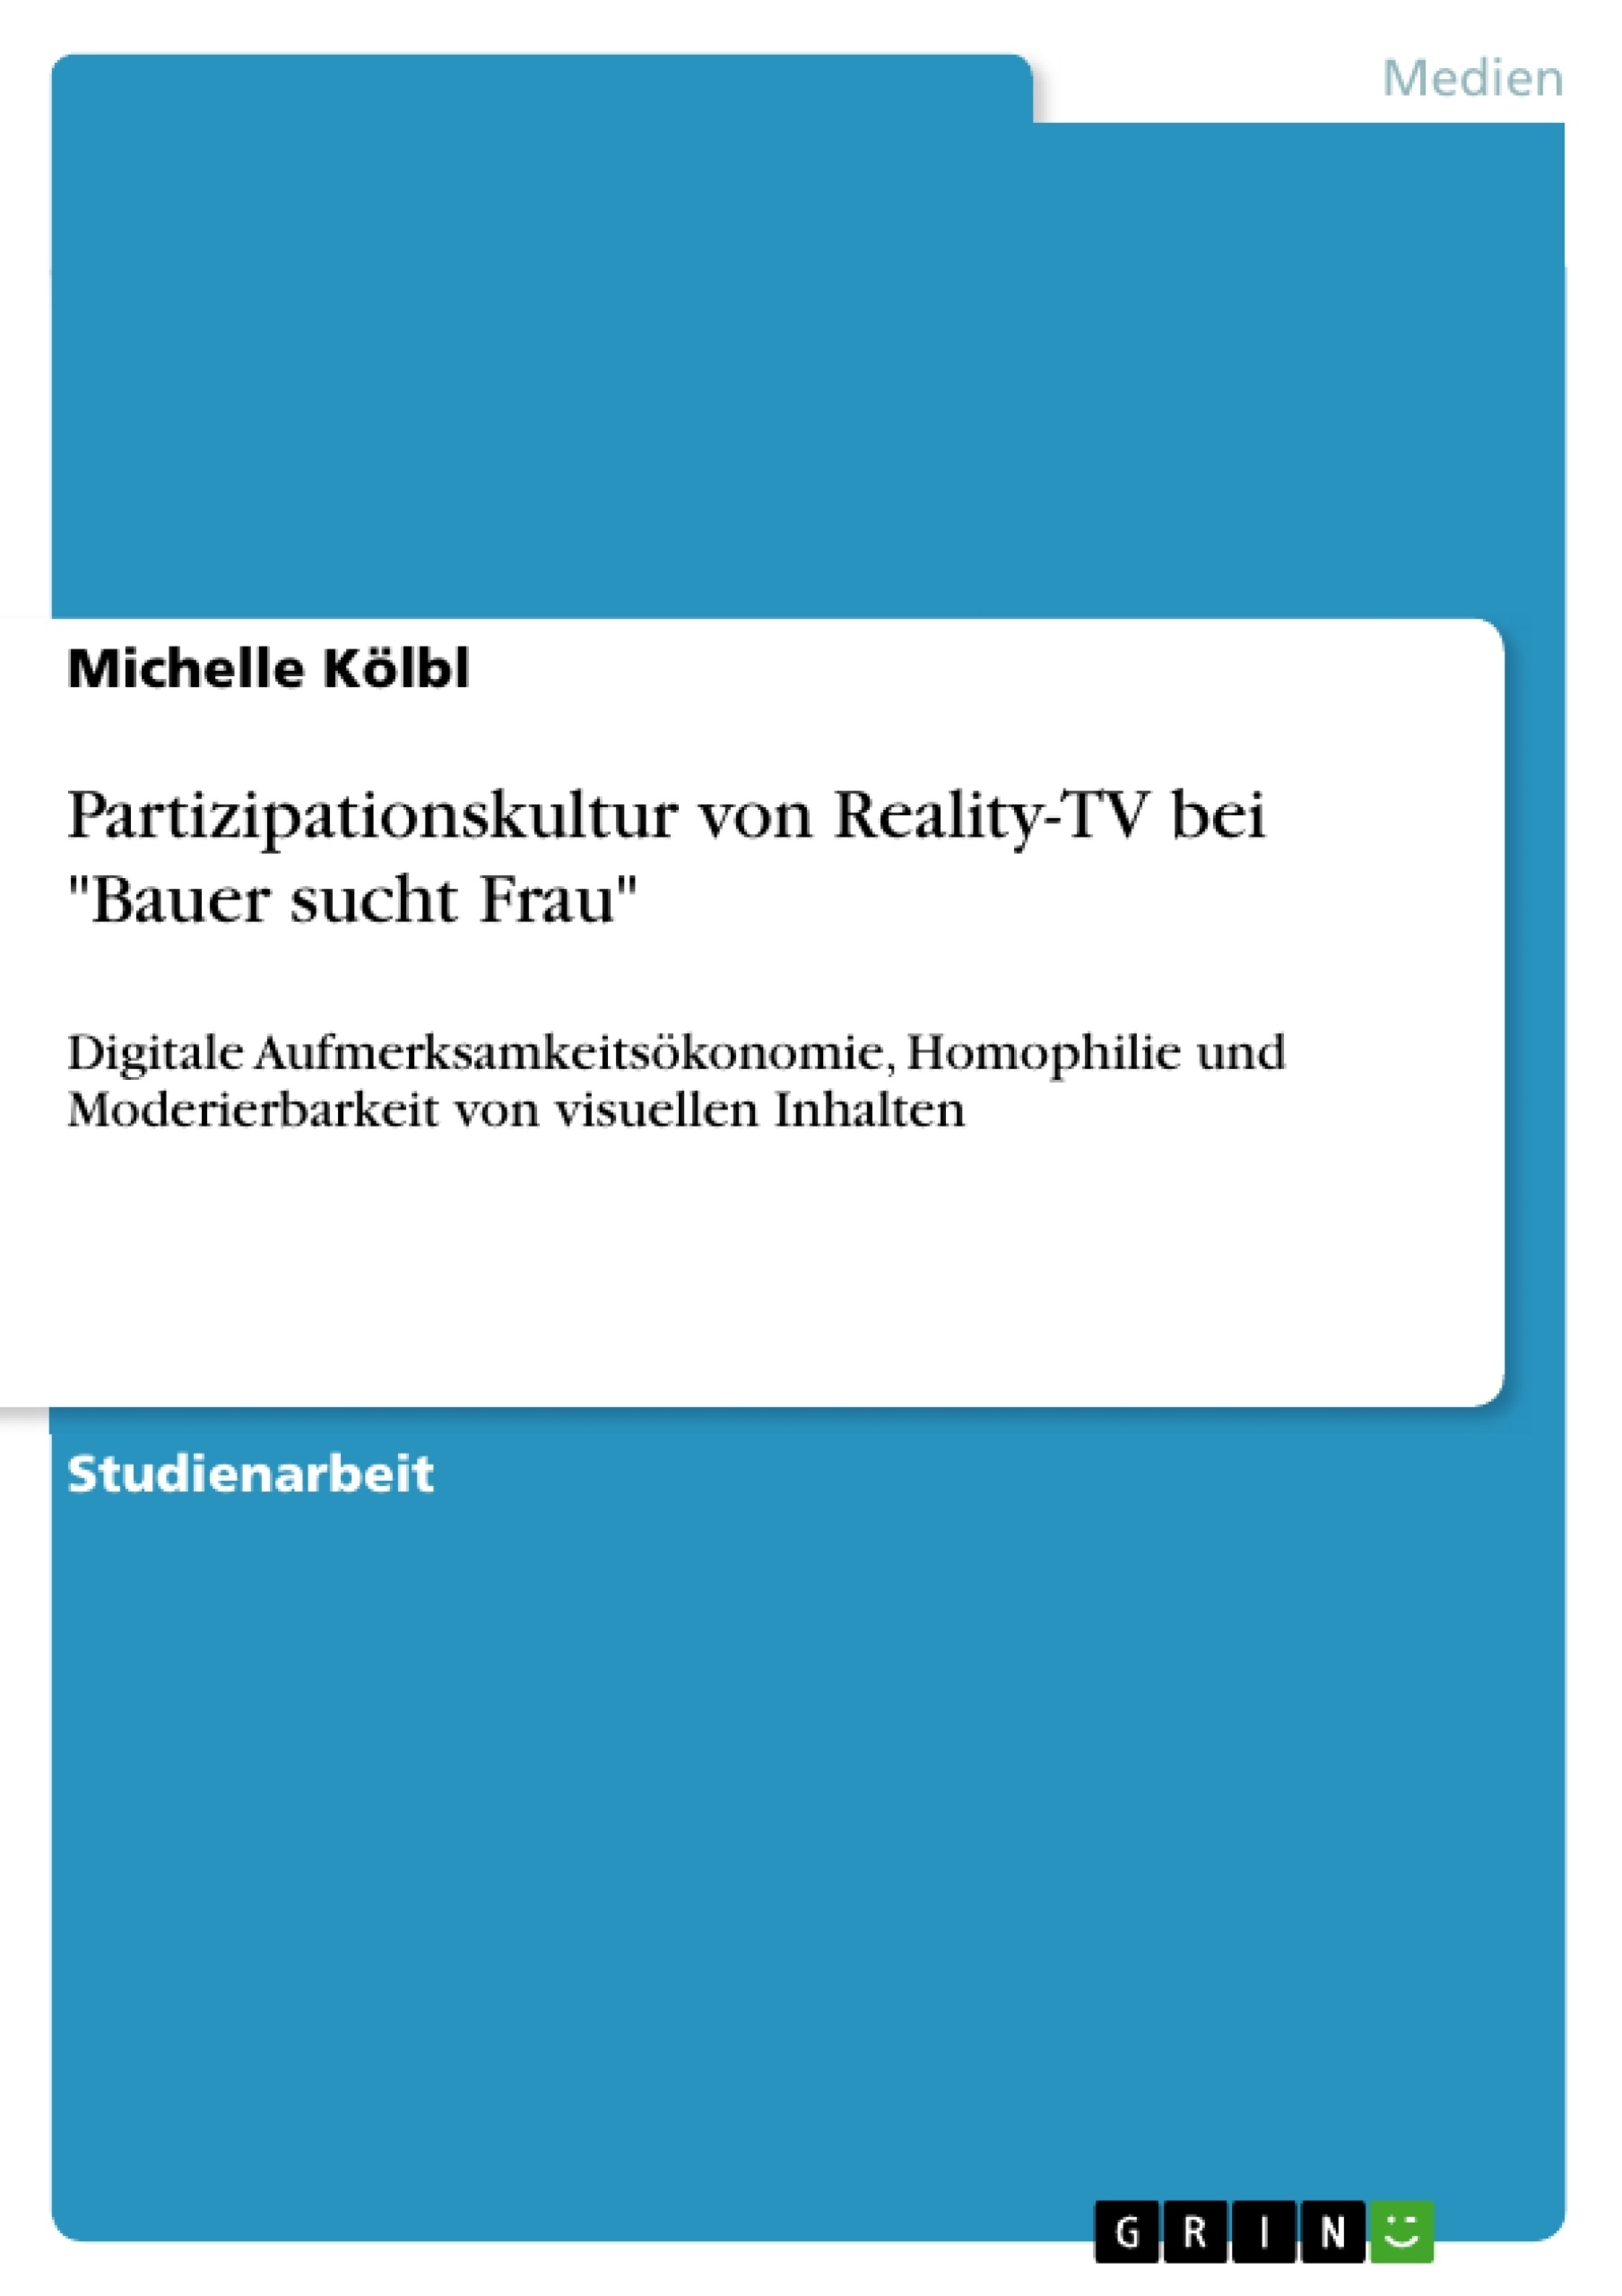 Título: Partizipationskultur von Reality-TV bei "Bauer sucht Frau"